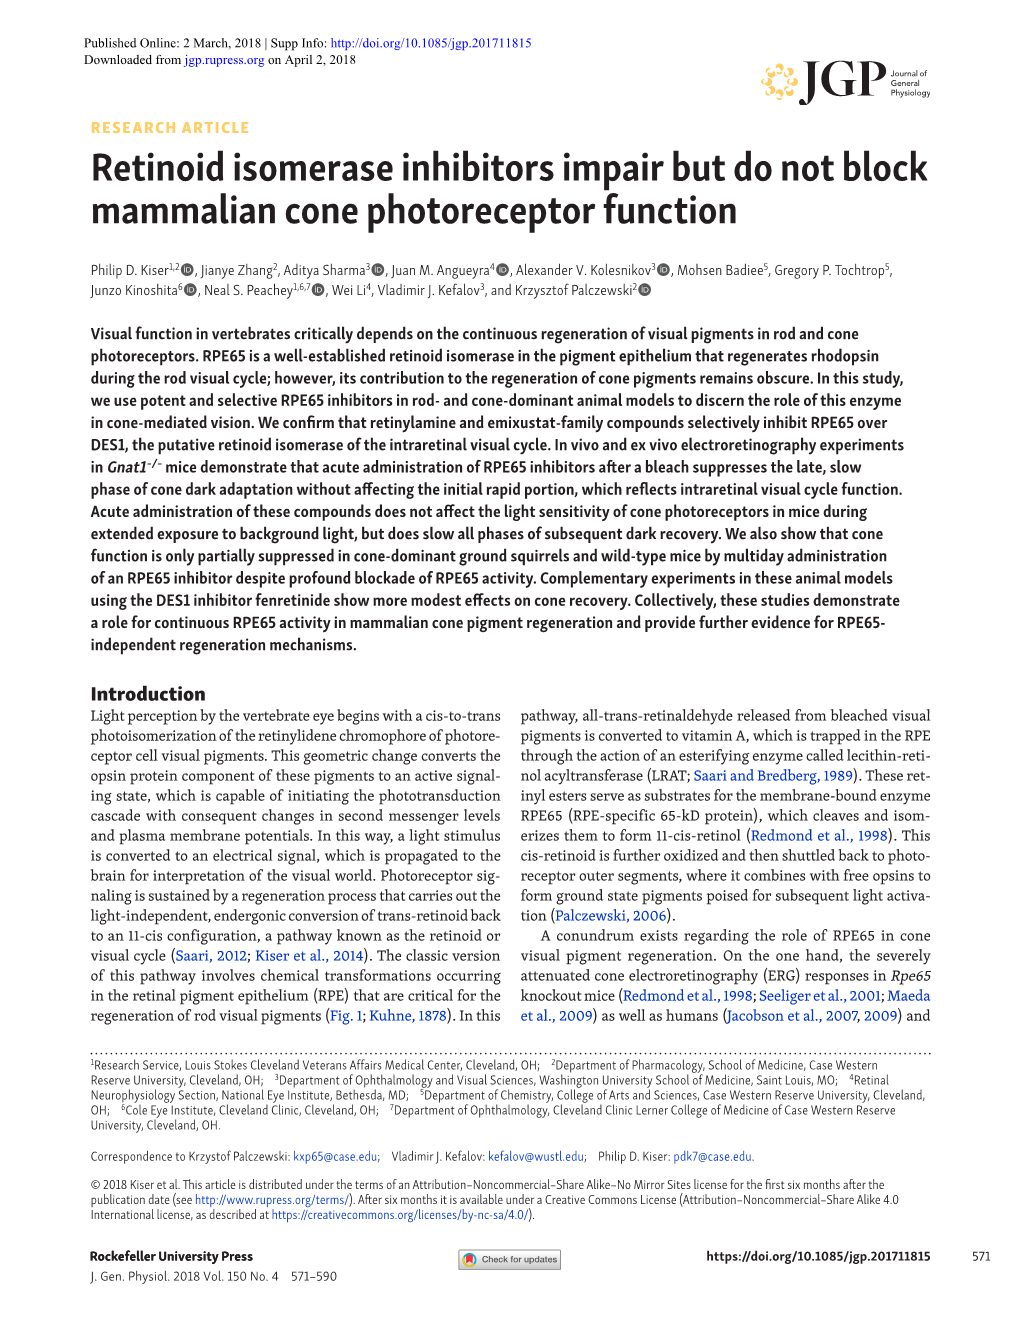 Retinoid Isomerase Inhibitors Impair but Do Not Block Mammalian Cone Photoreceptor Function